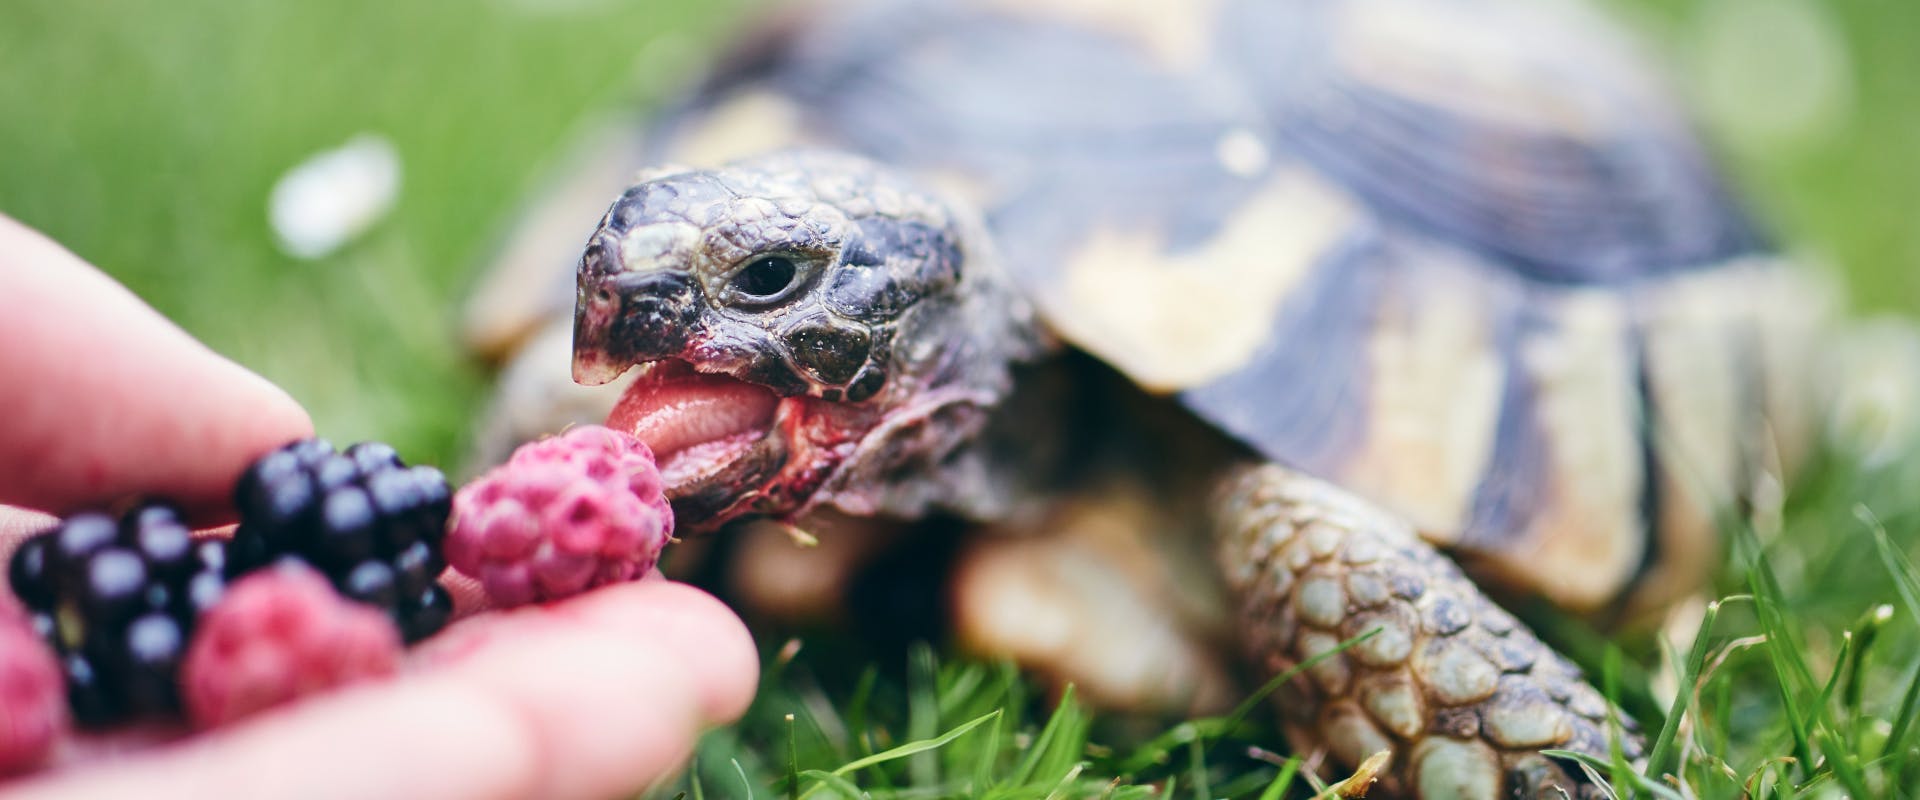 A pet tortoise being fed berries.